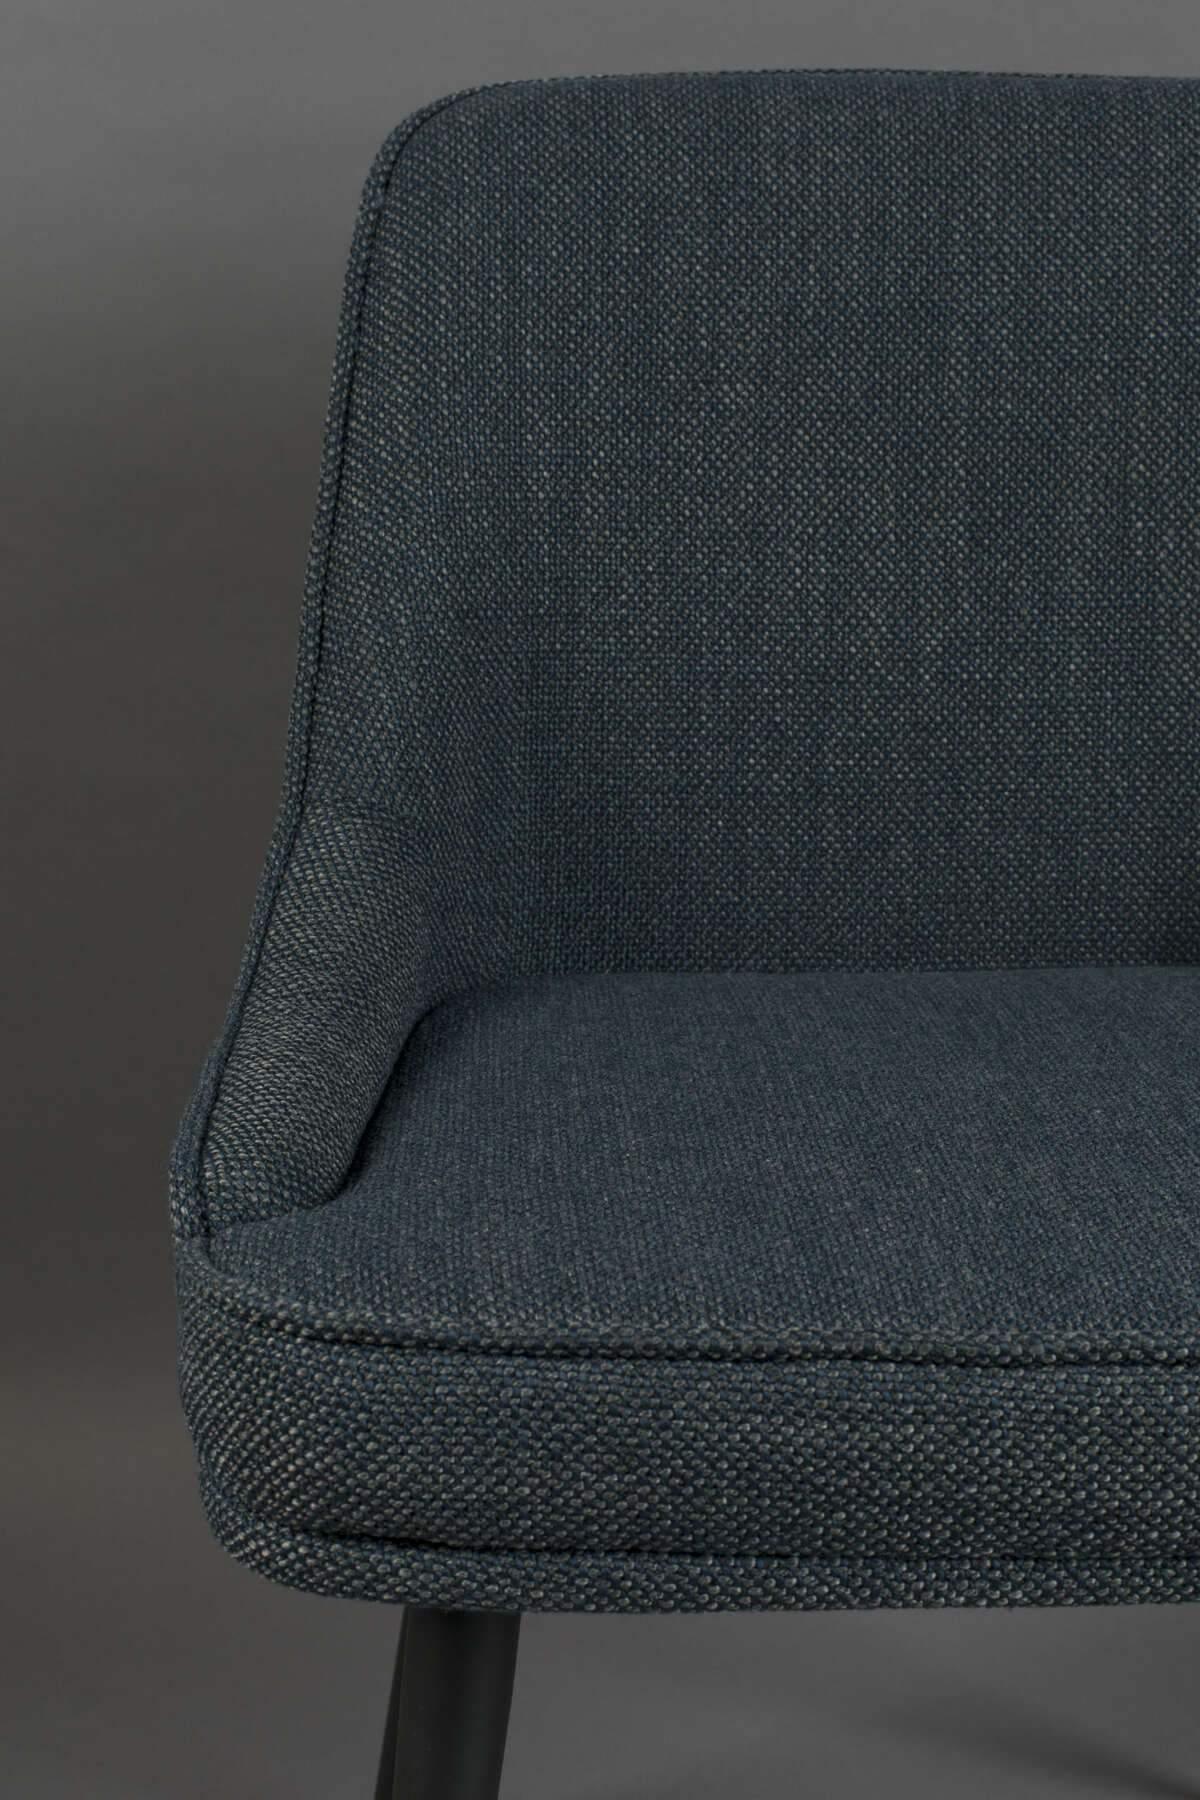 Krzesło MAGNUS niebieski, Dutchbone, Eye on Design